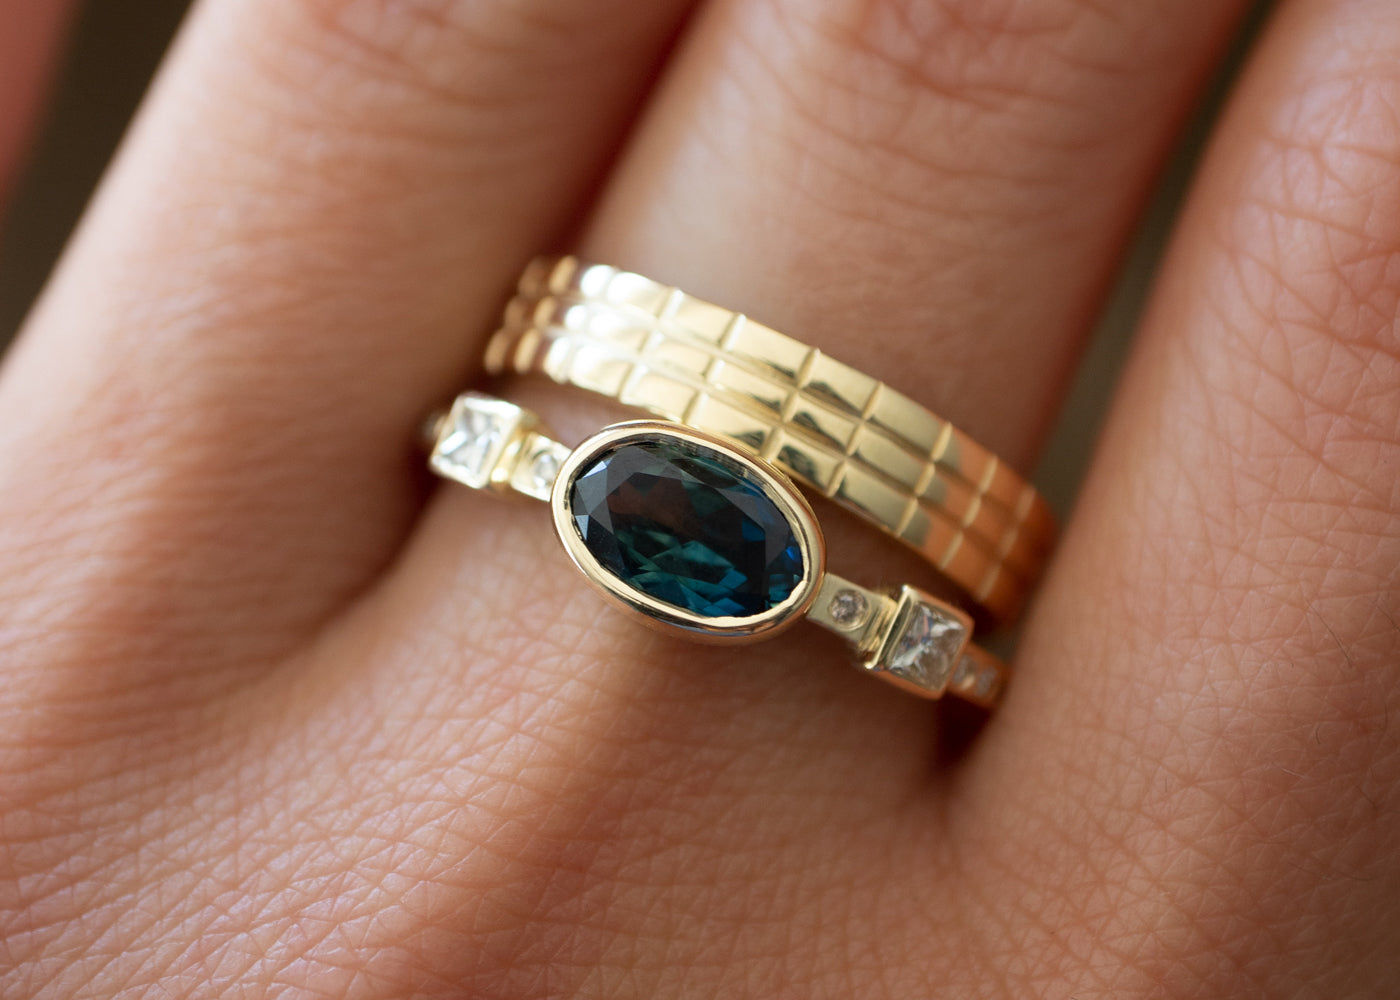 In Stock | Hikaru Ring No.14 - Blue/Teal Oval Australian Sapphire